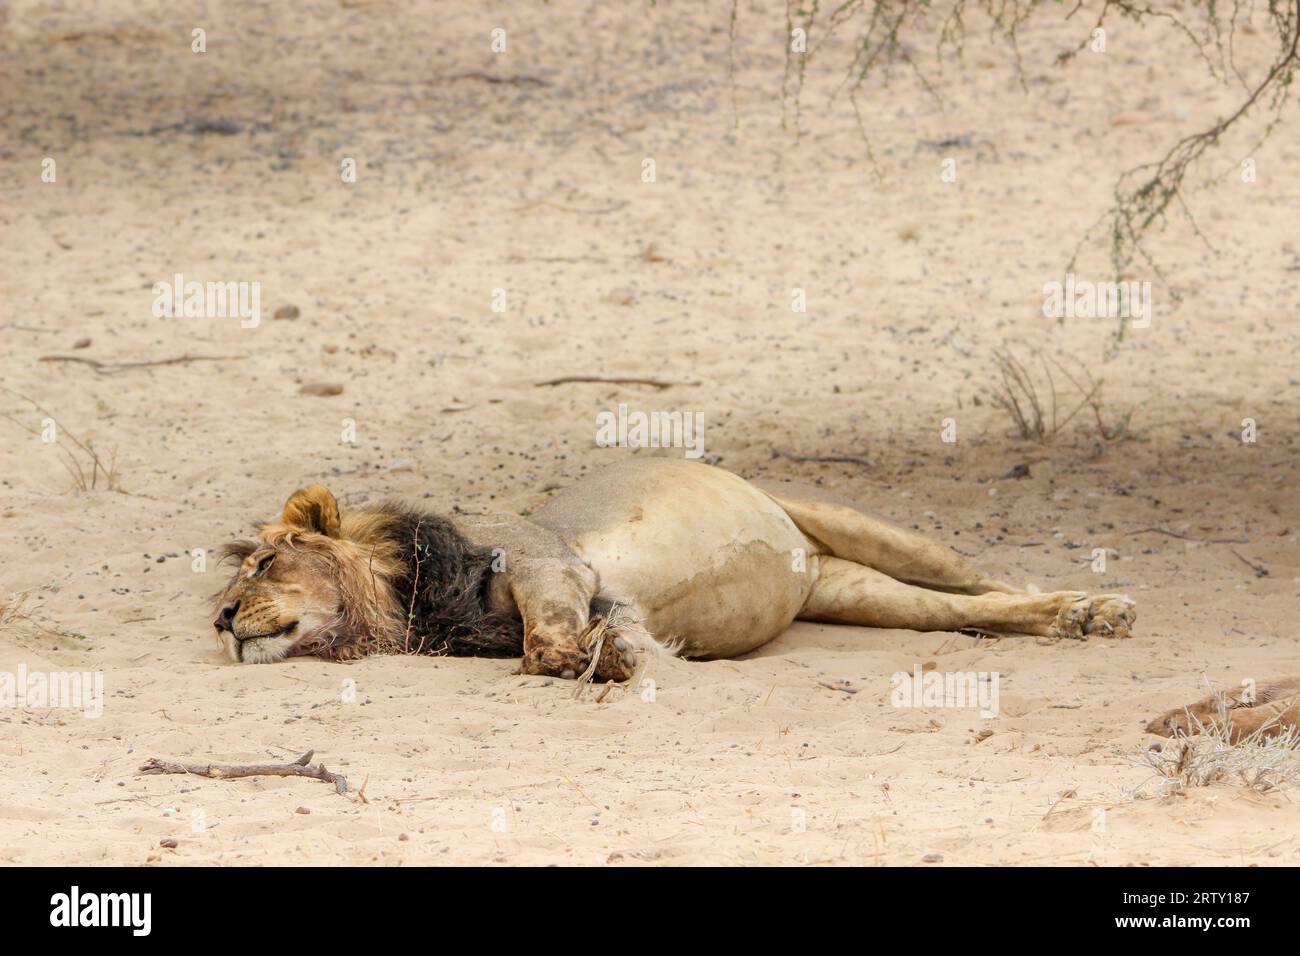 Male lion in the Kgalagadi Transfrontier Park, Kalahari, South Africa Stock Photo